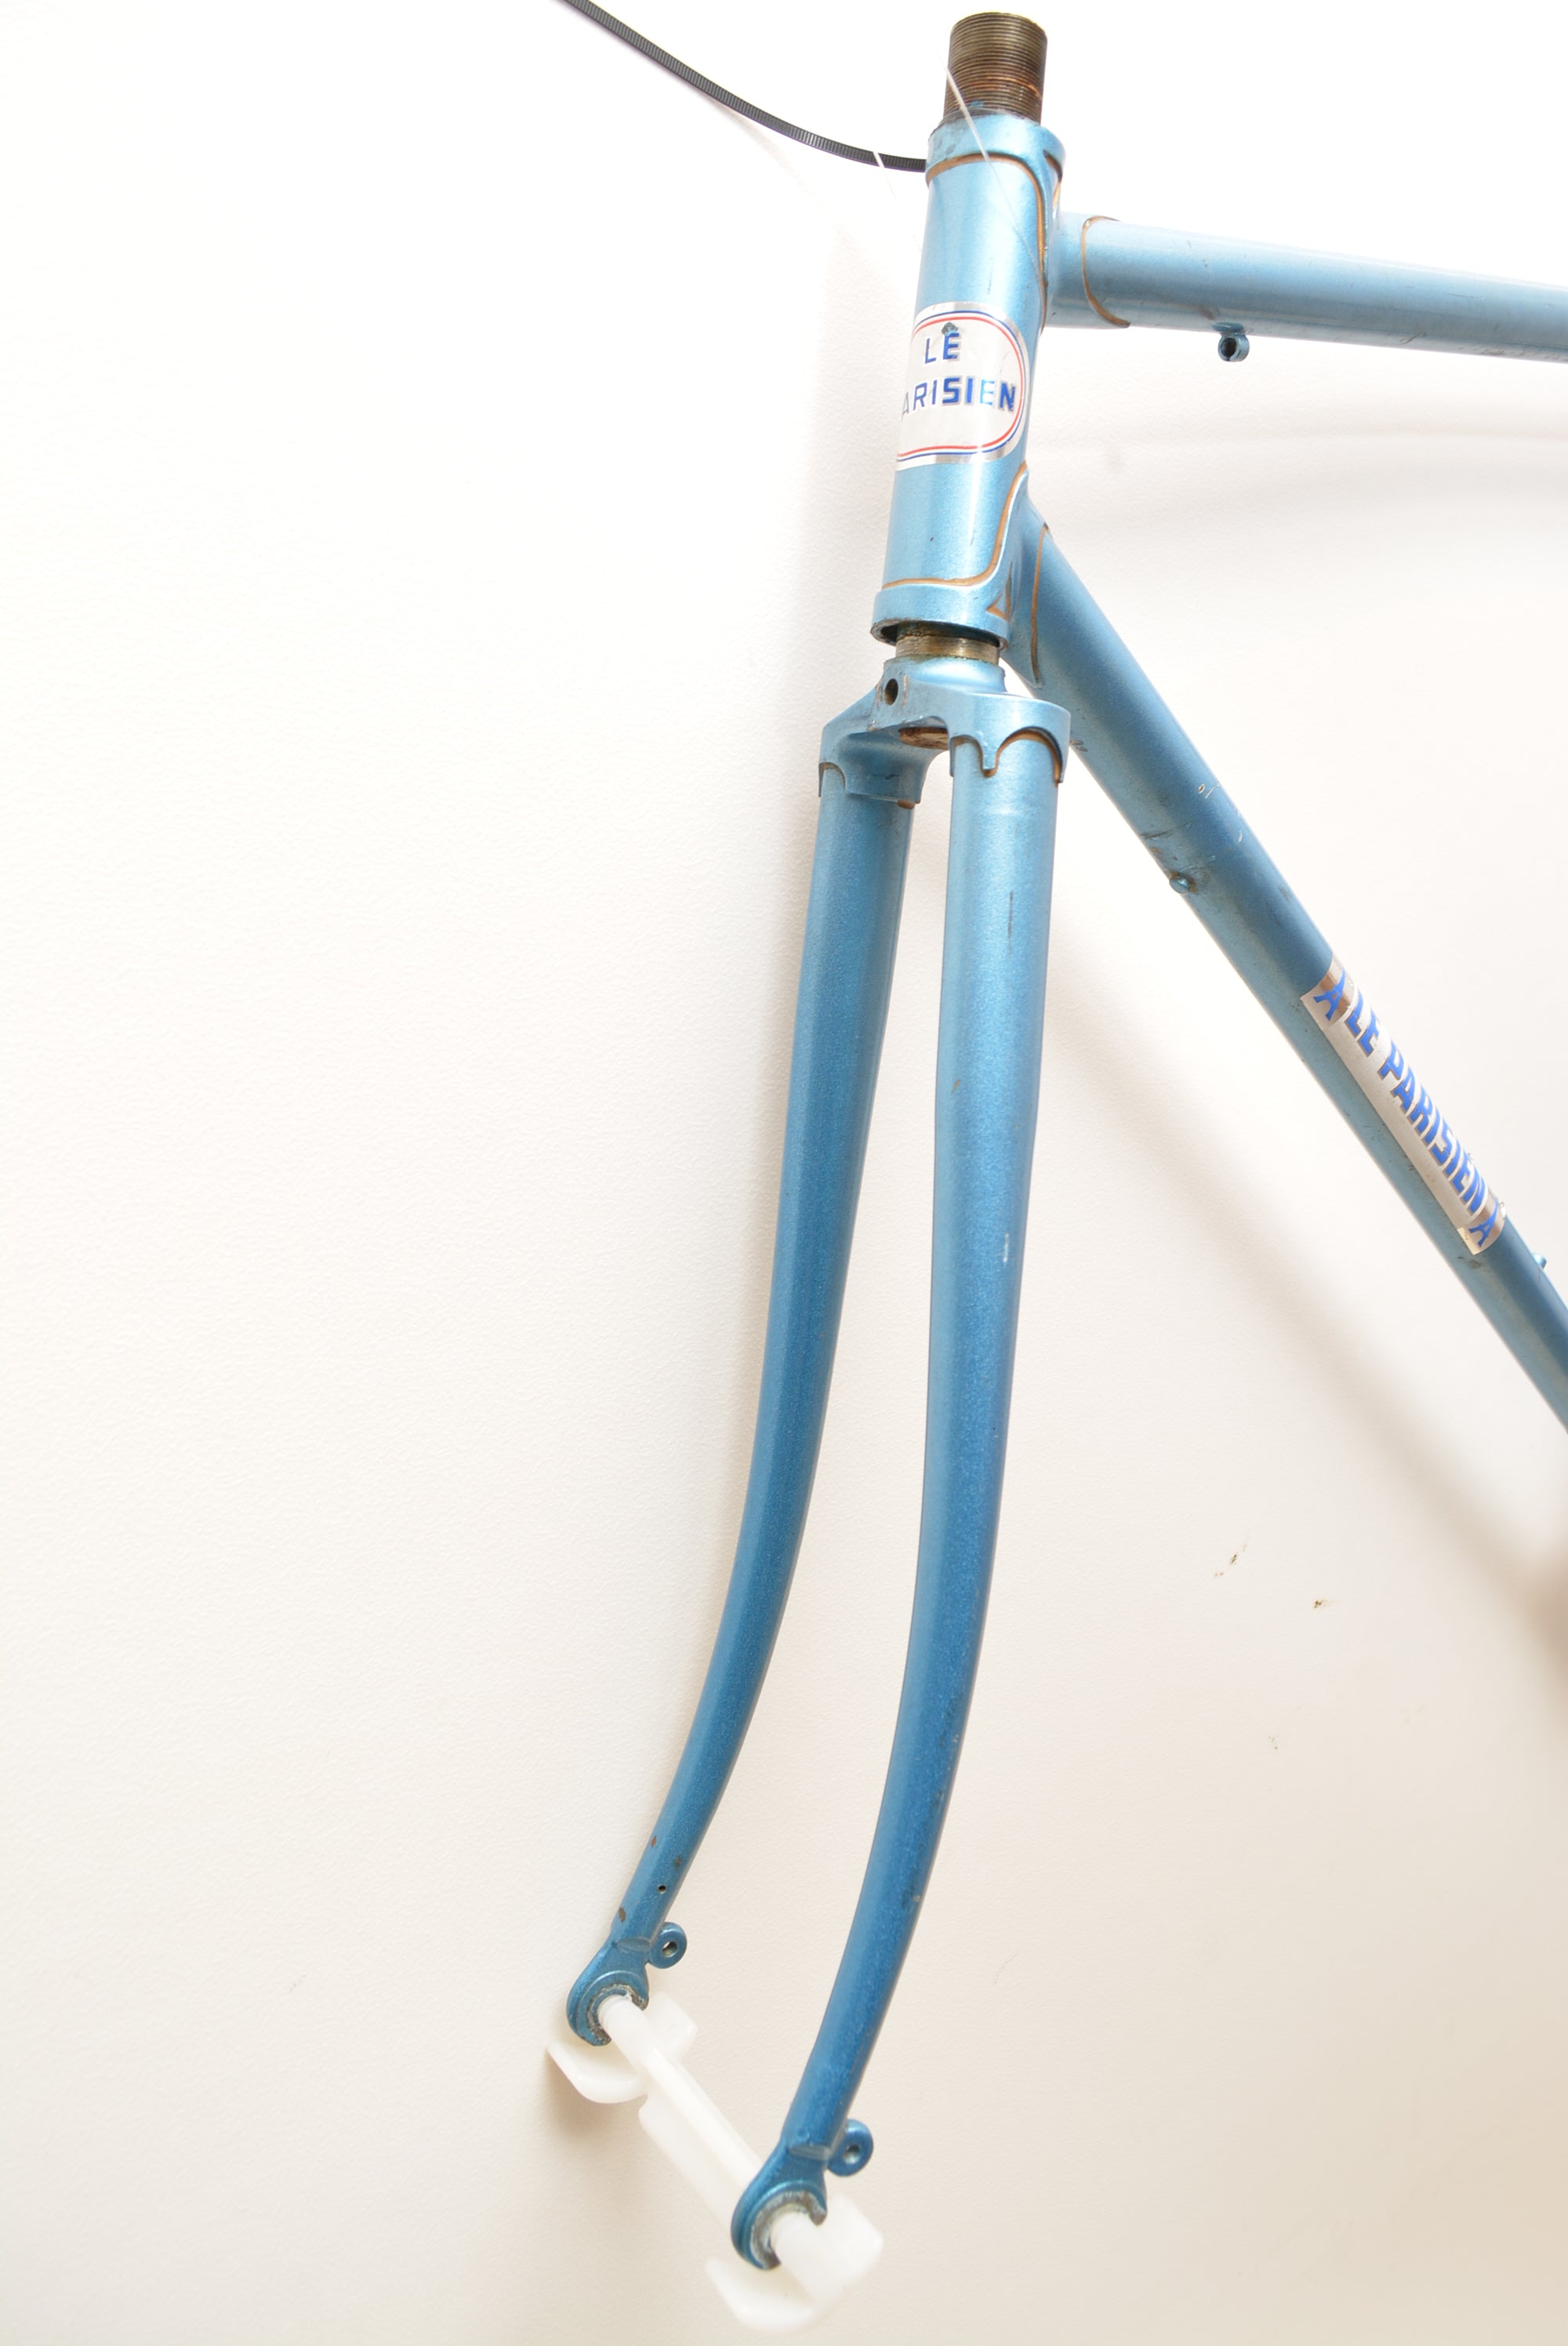 Le Parisien Rennradrahmen 54cm Reynolds 531 blau